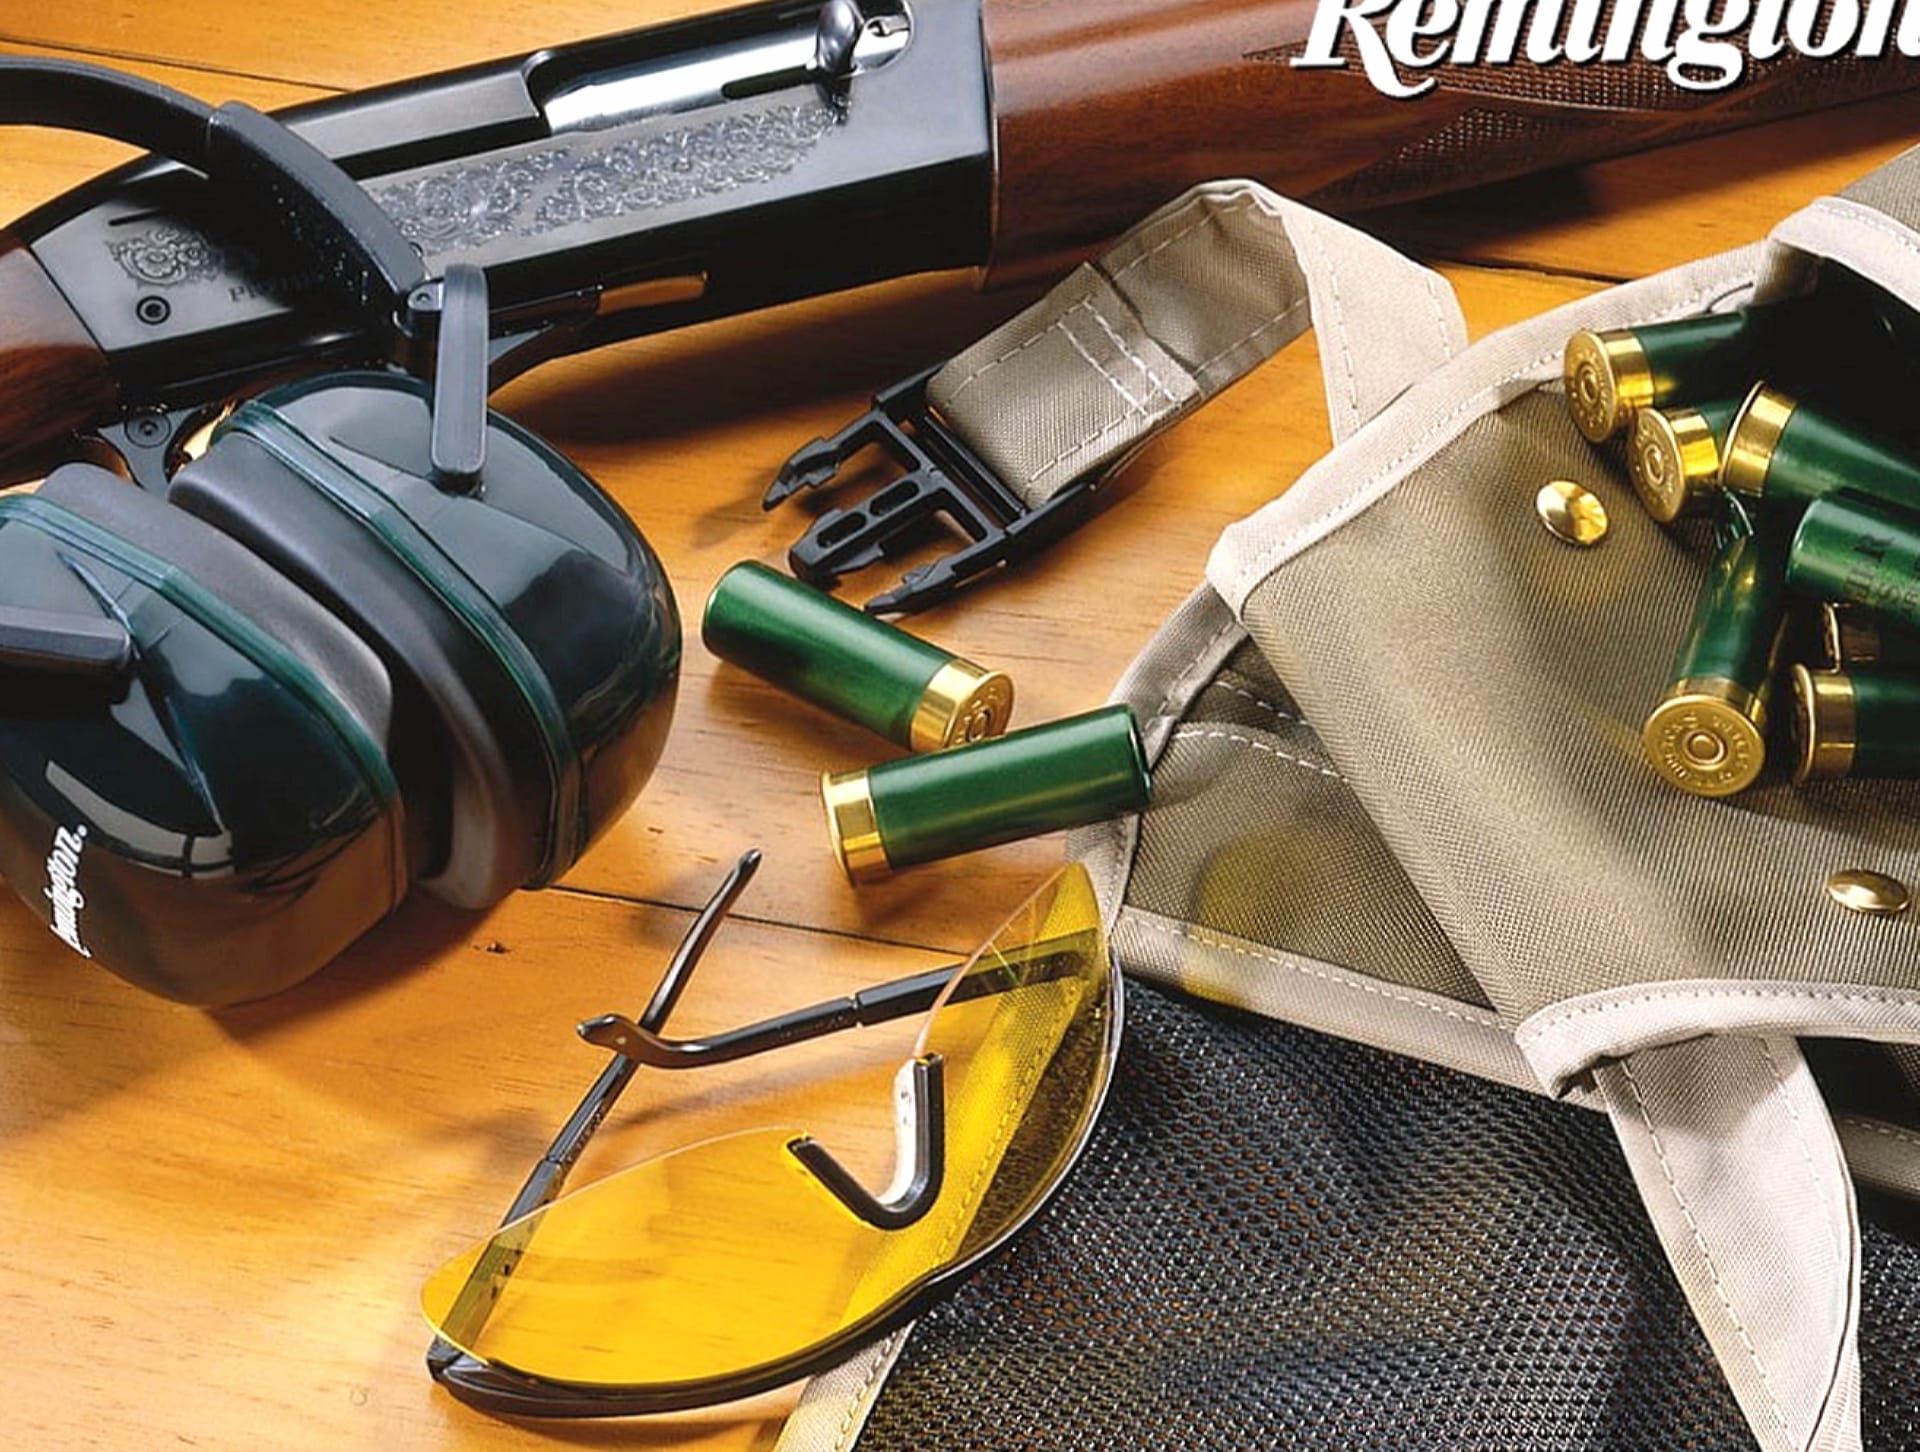 Remington Shotgun at 1334 x 750 iPhone 7 size wallpapers HD quality